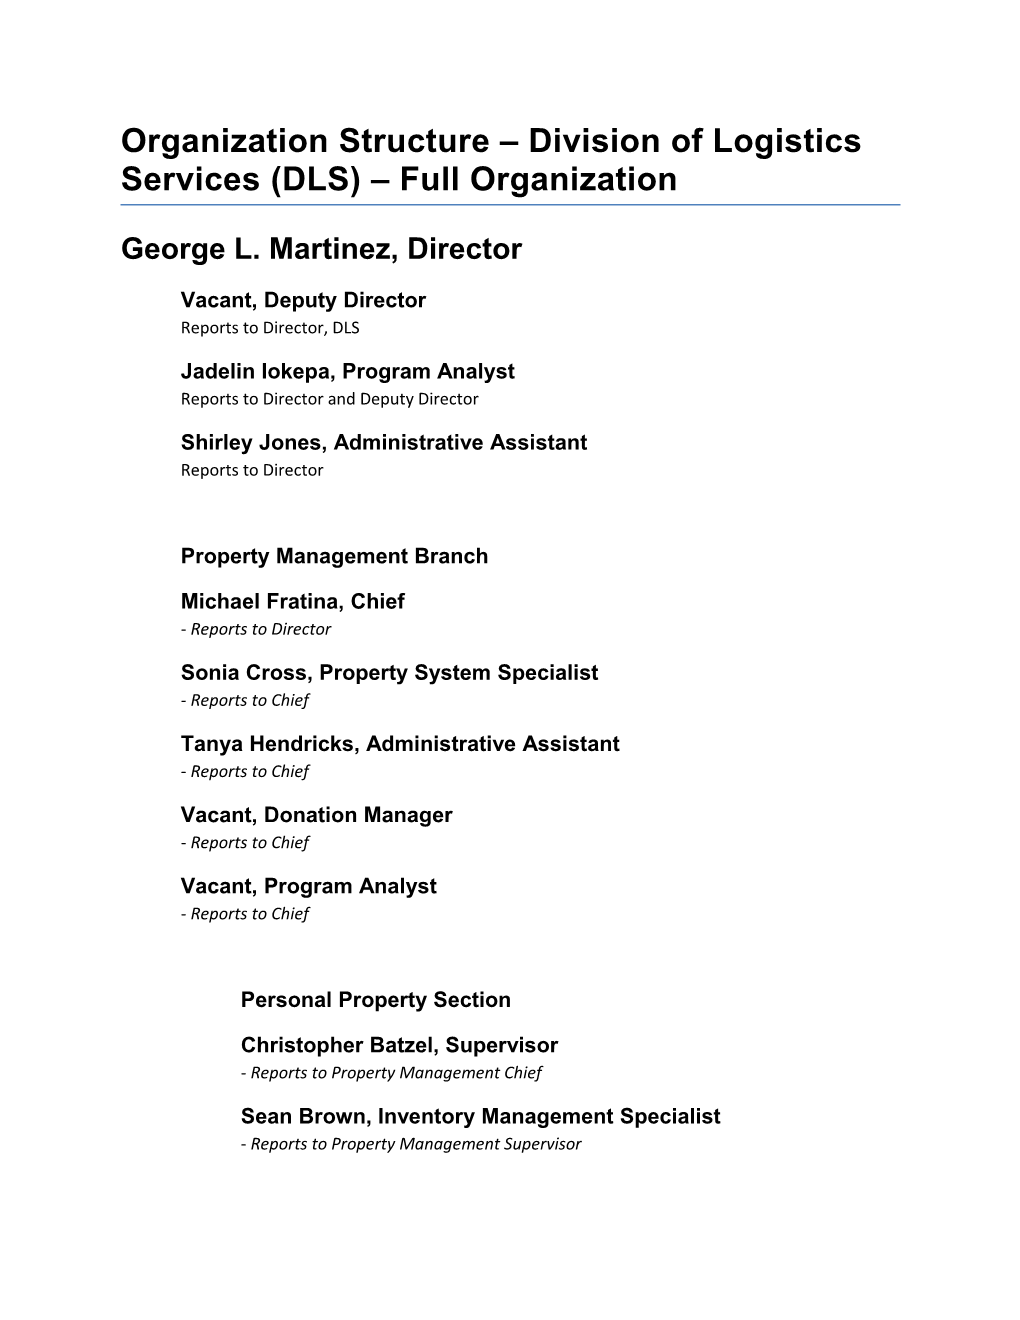 Organization Structure Division of Logistics Services (DLS) Full Organization